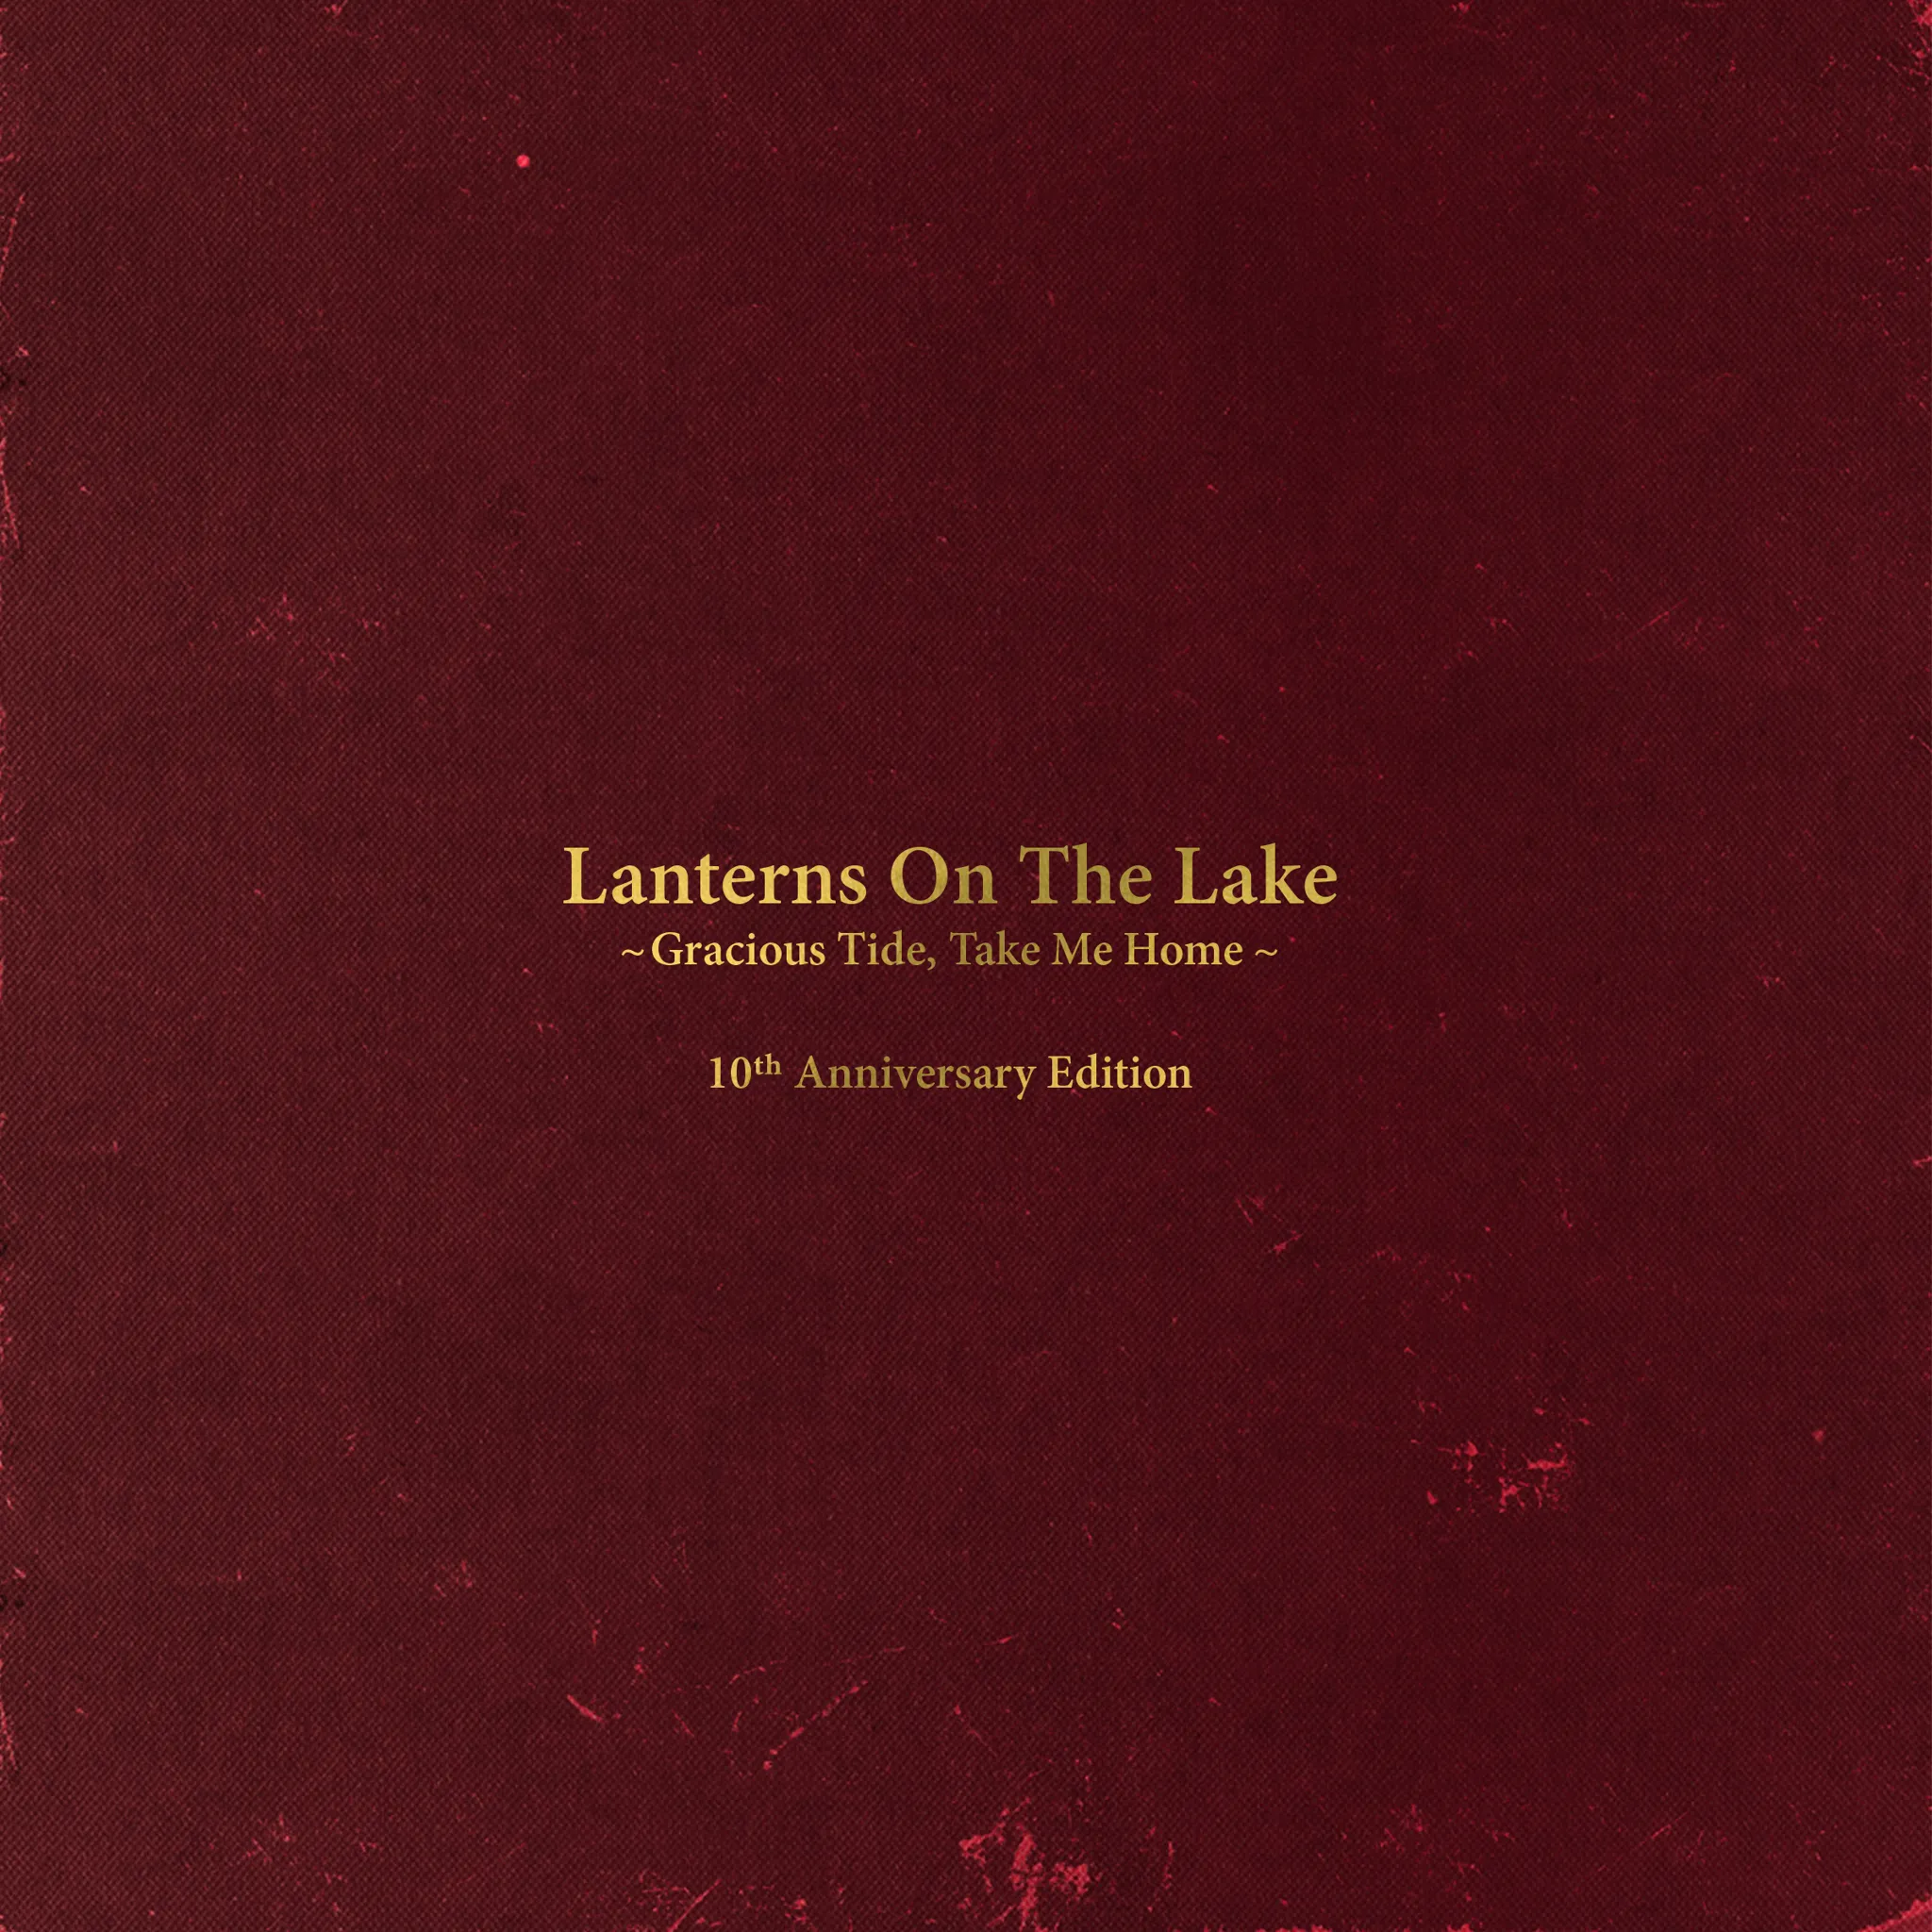 Lanterns on the Lake - Gracious Tide, Take Me Home – 10th Anniversary Edition artwork